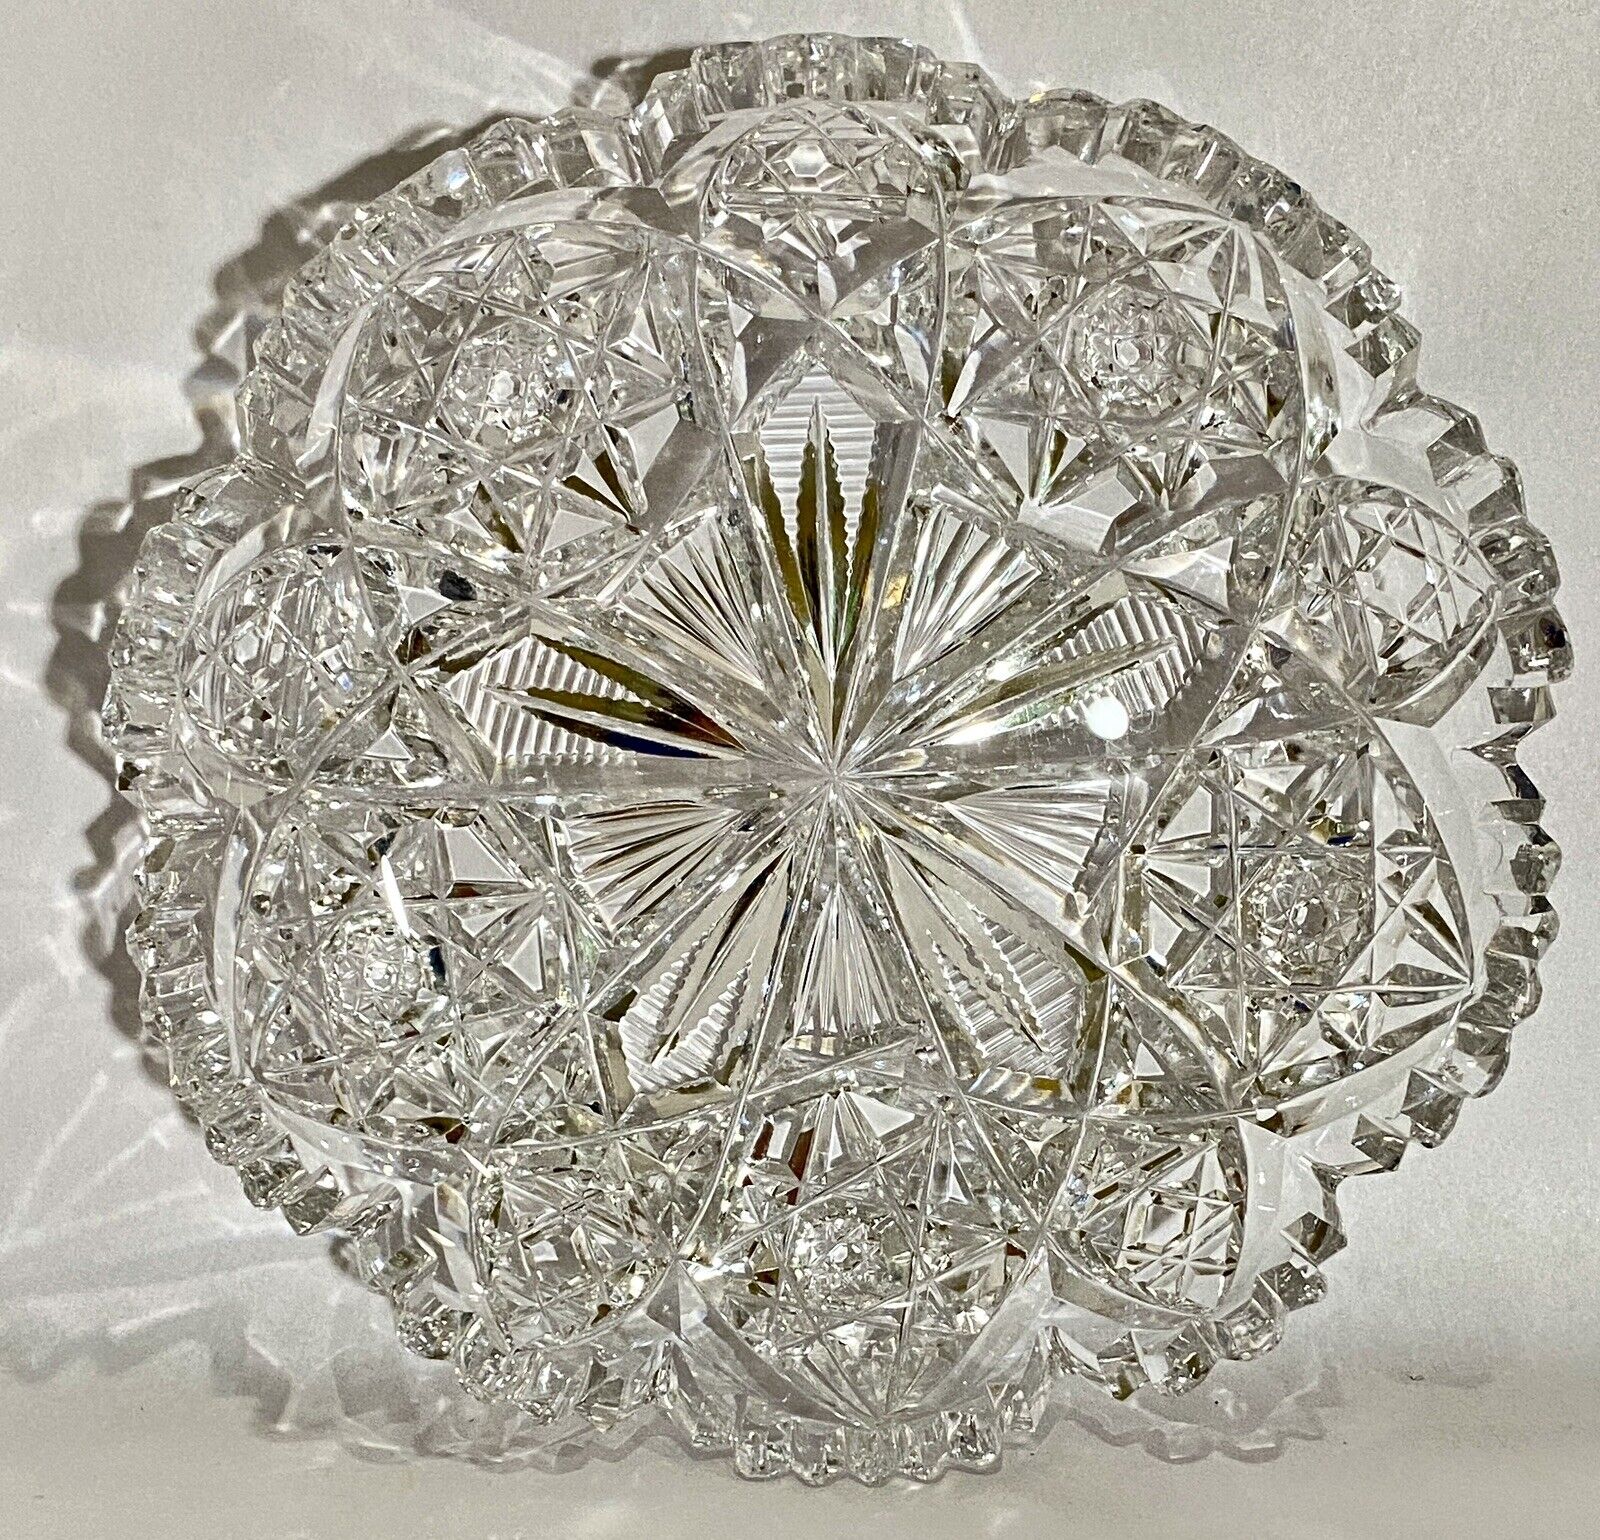 American Brilliant Period ABP Cut Trinket Jewelry Glass Dish - FAB Condition 5”